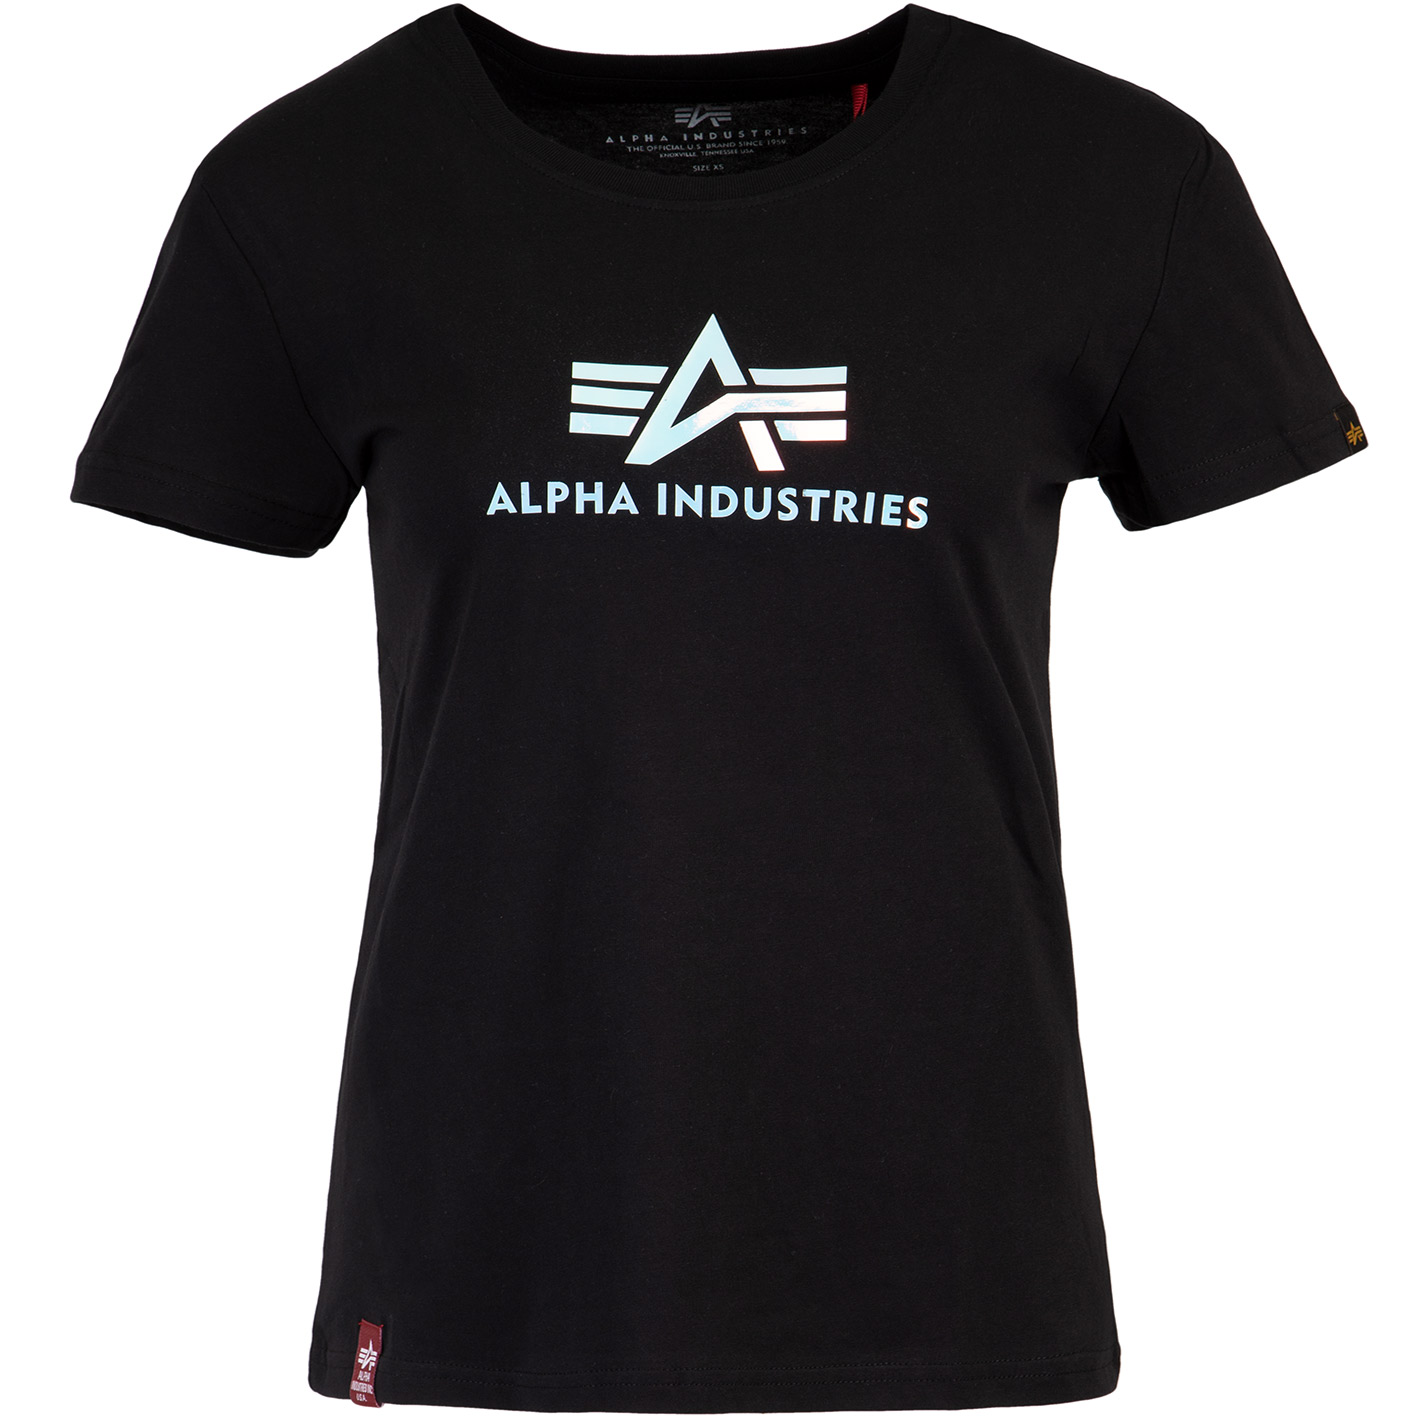 ☆ Alpha Industries Rainbow Damen T-Shirt schwarz - hier bestellen!